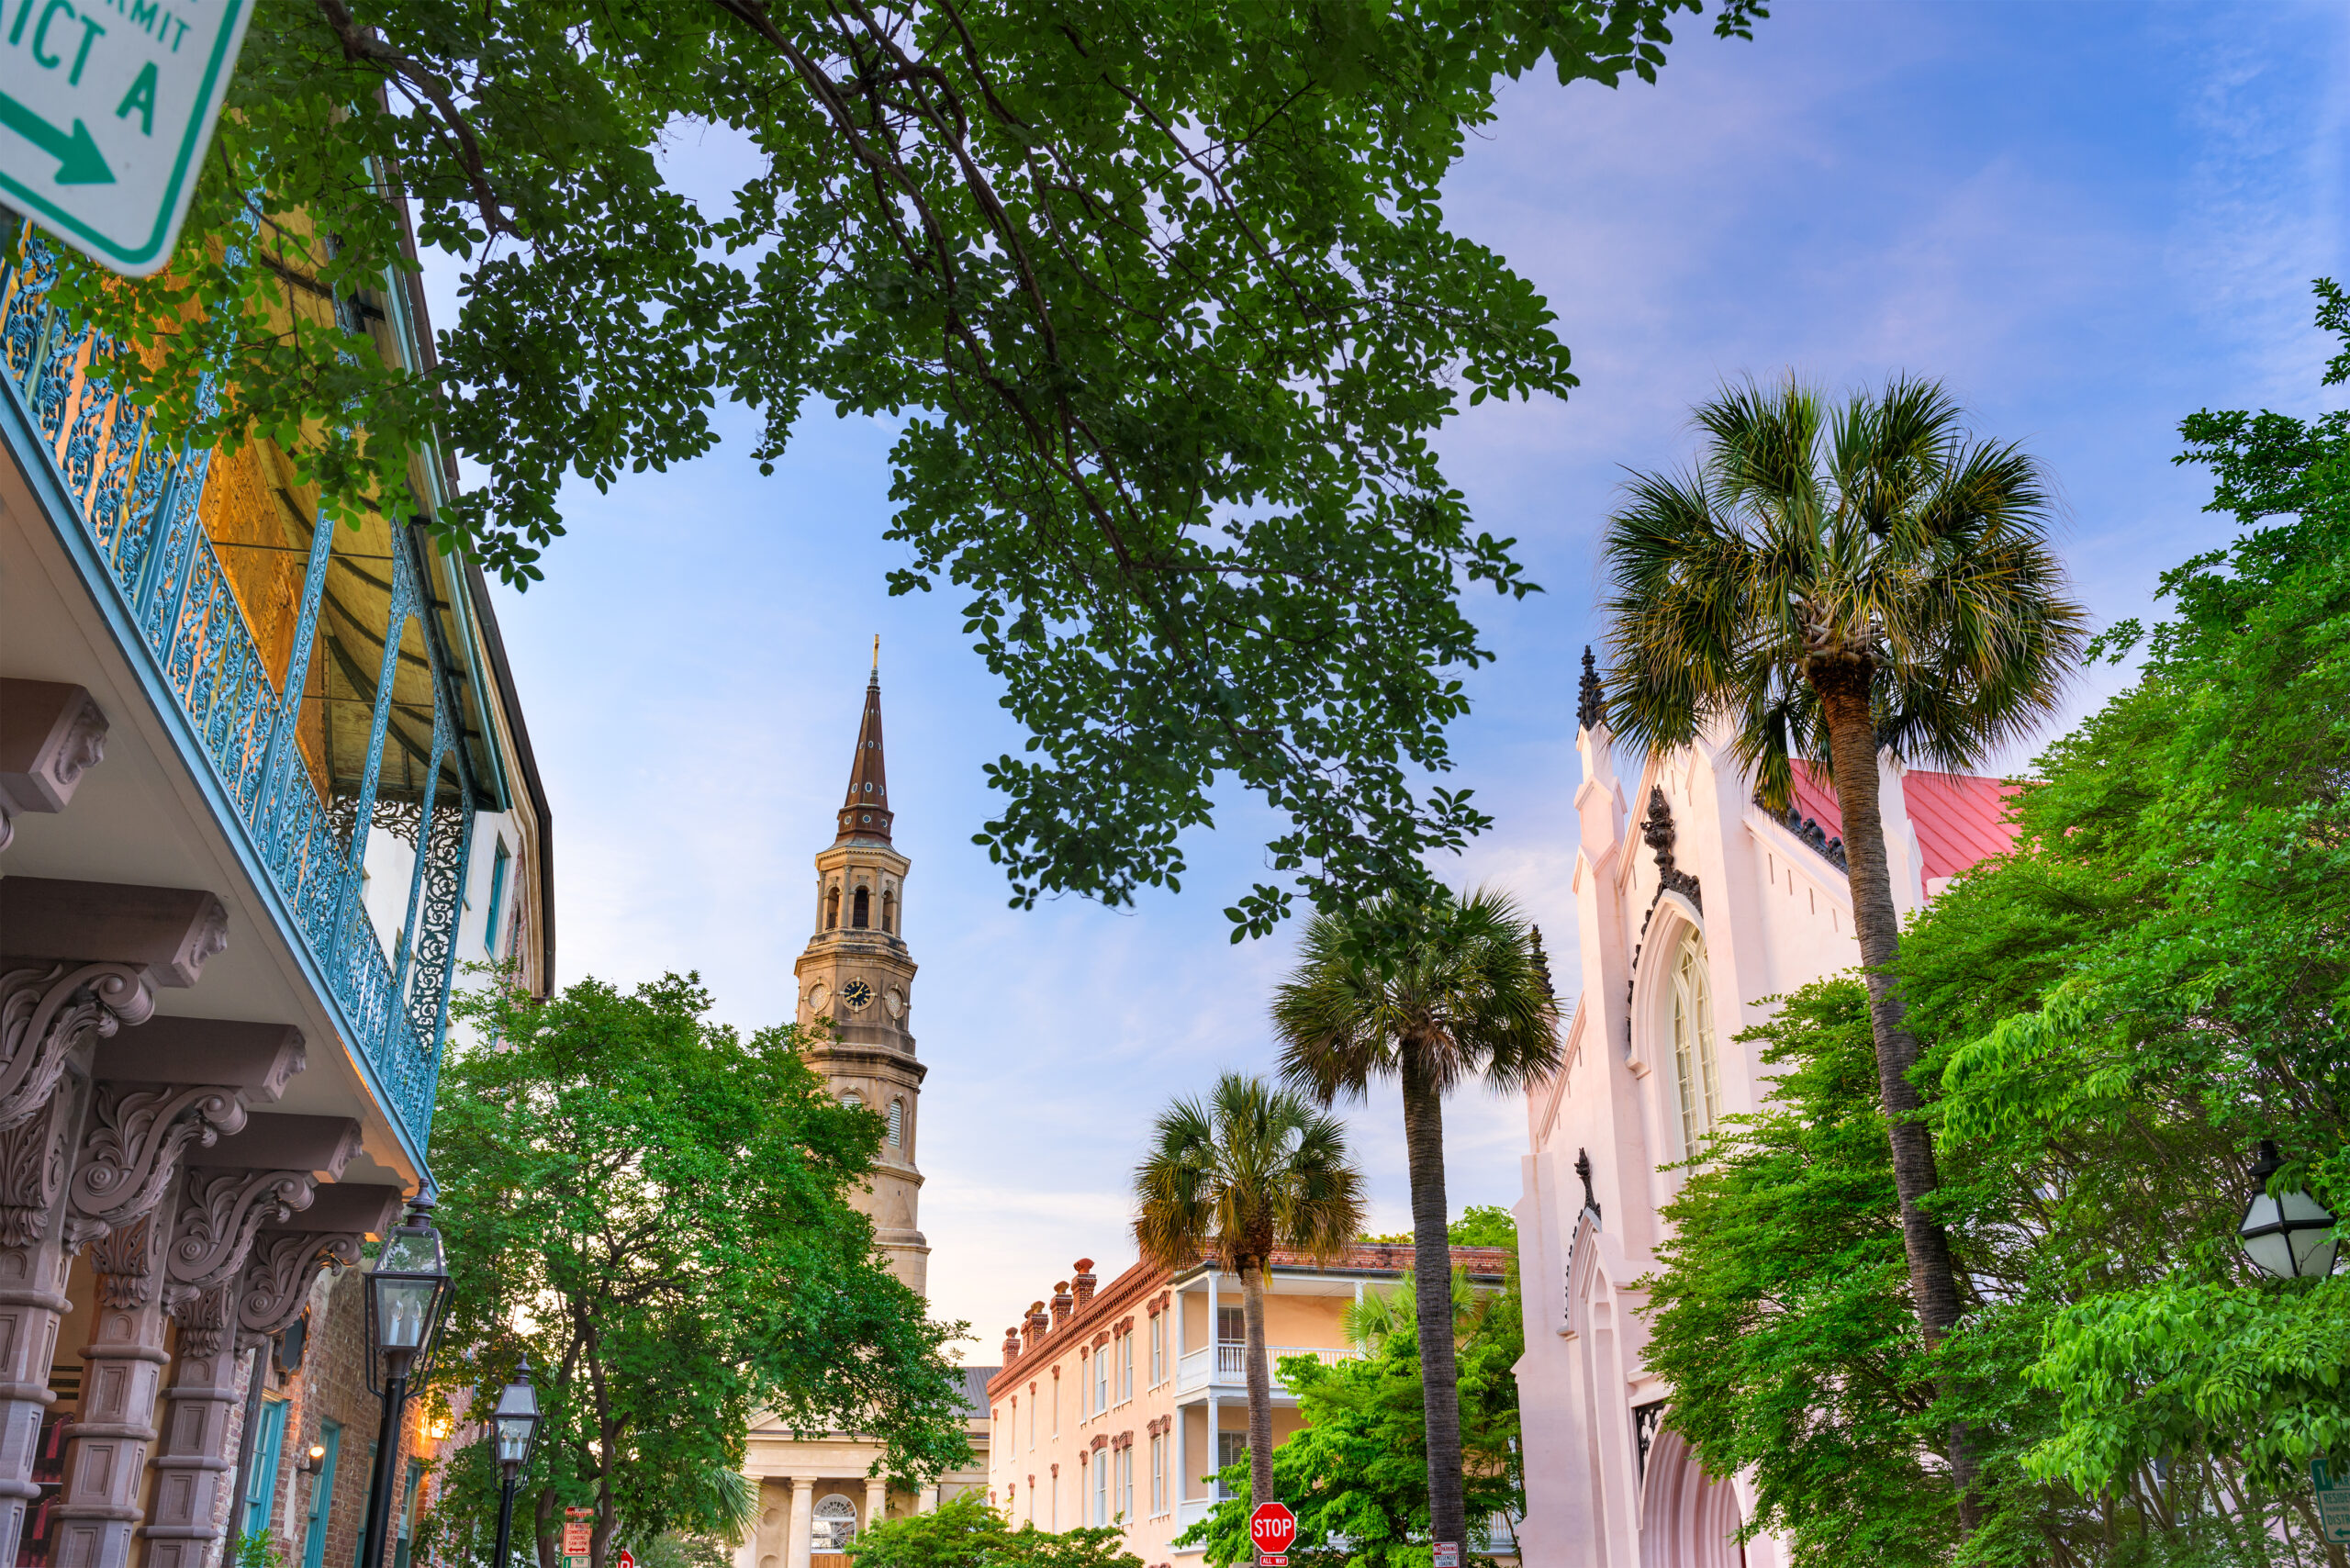 Charleston, South Carolina, USA view of the French Quarter.